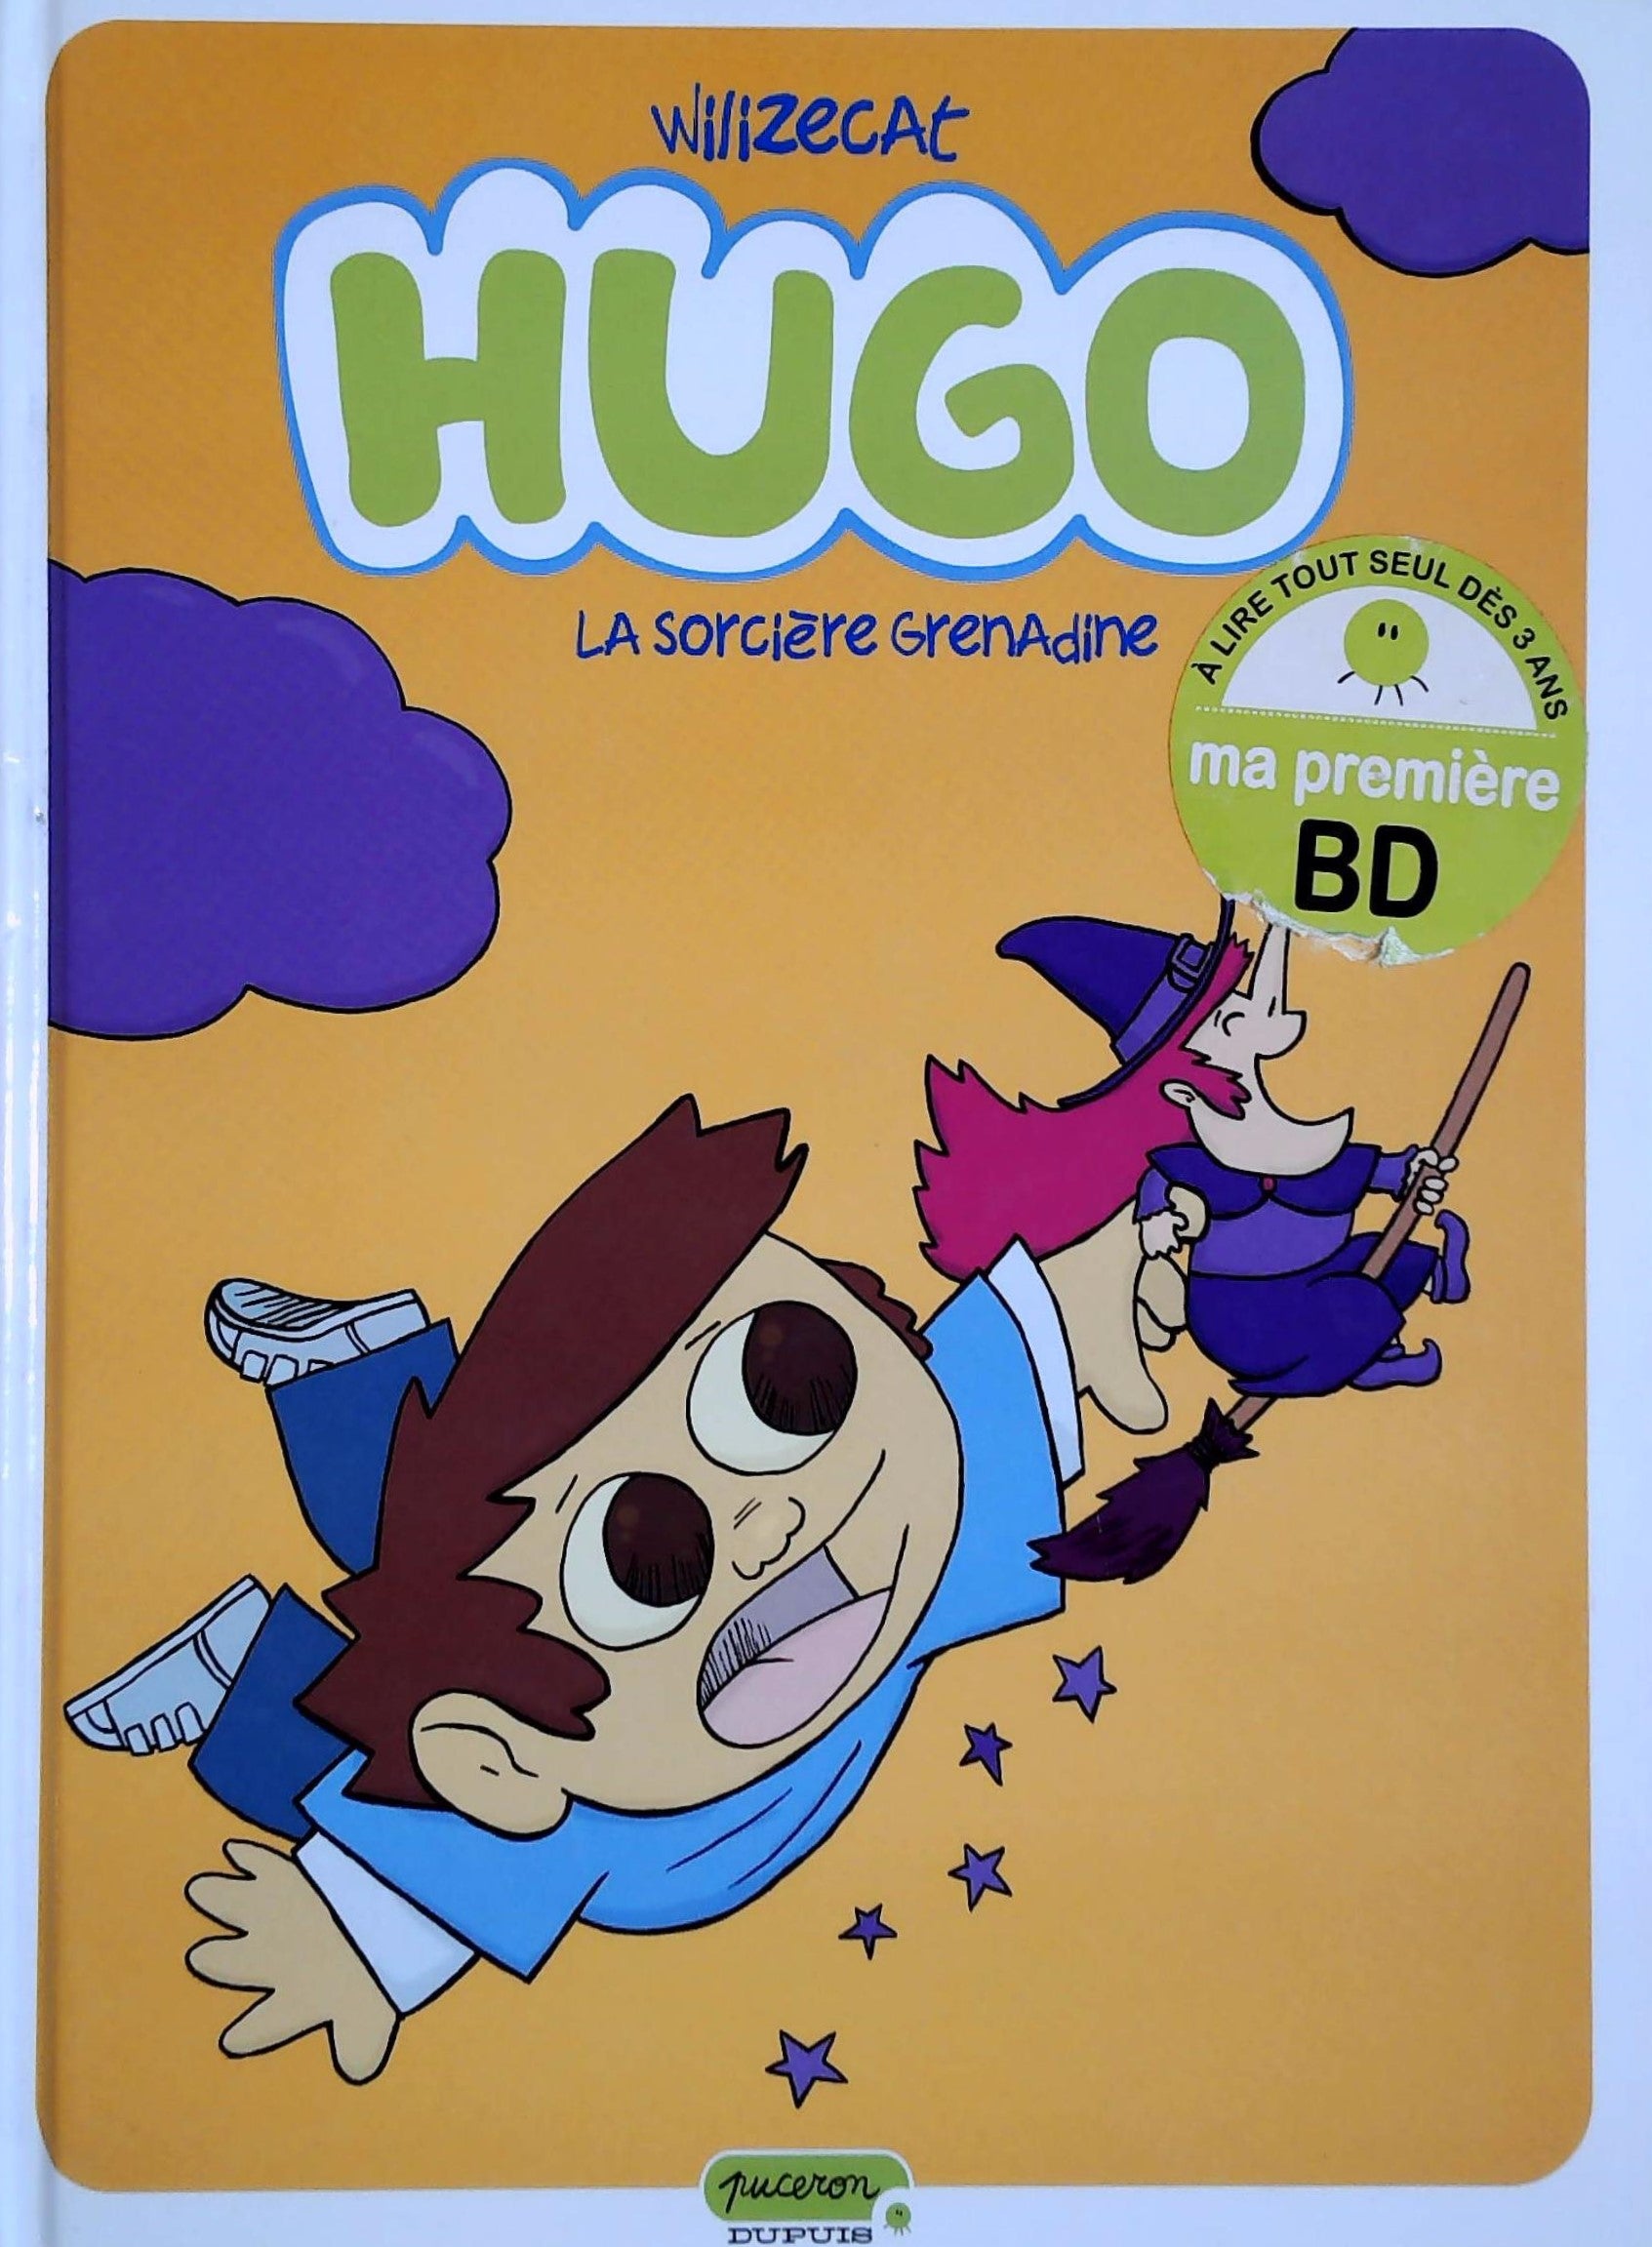 Livre ISBN 2800140054 Hugo # 2 : La sorcière Grenadine (Wilizecat)